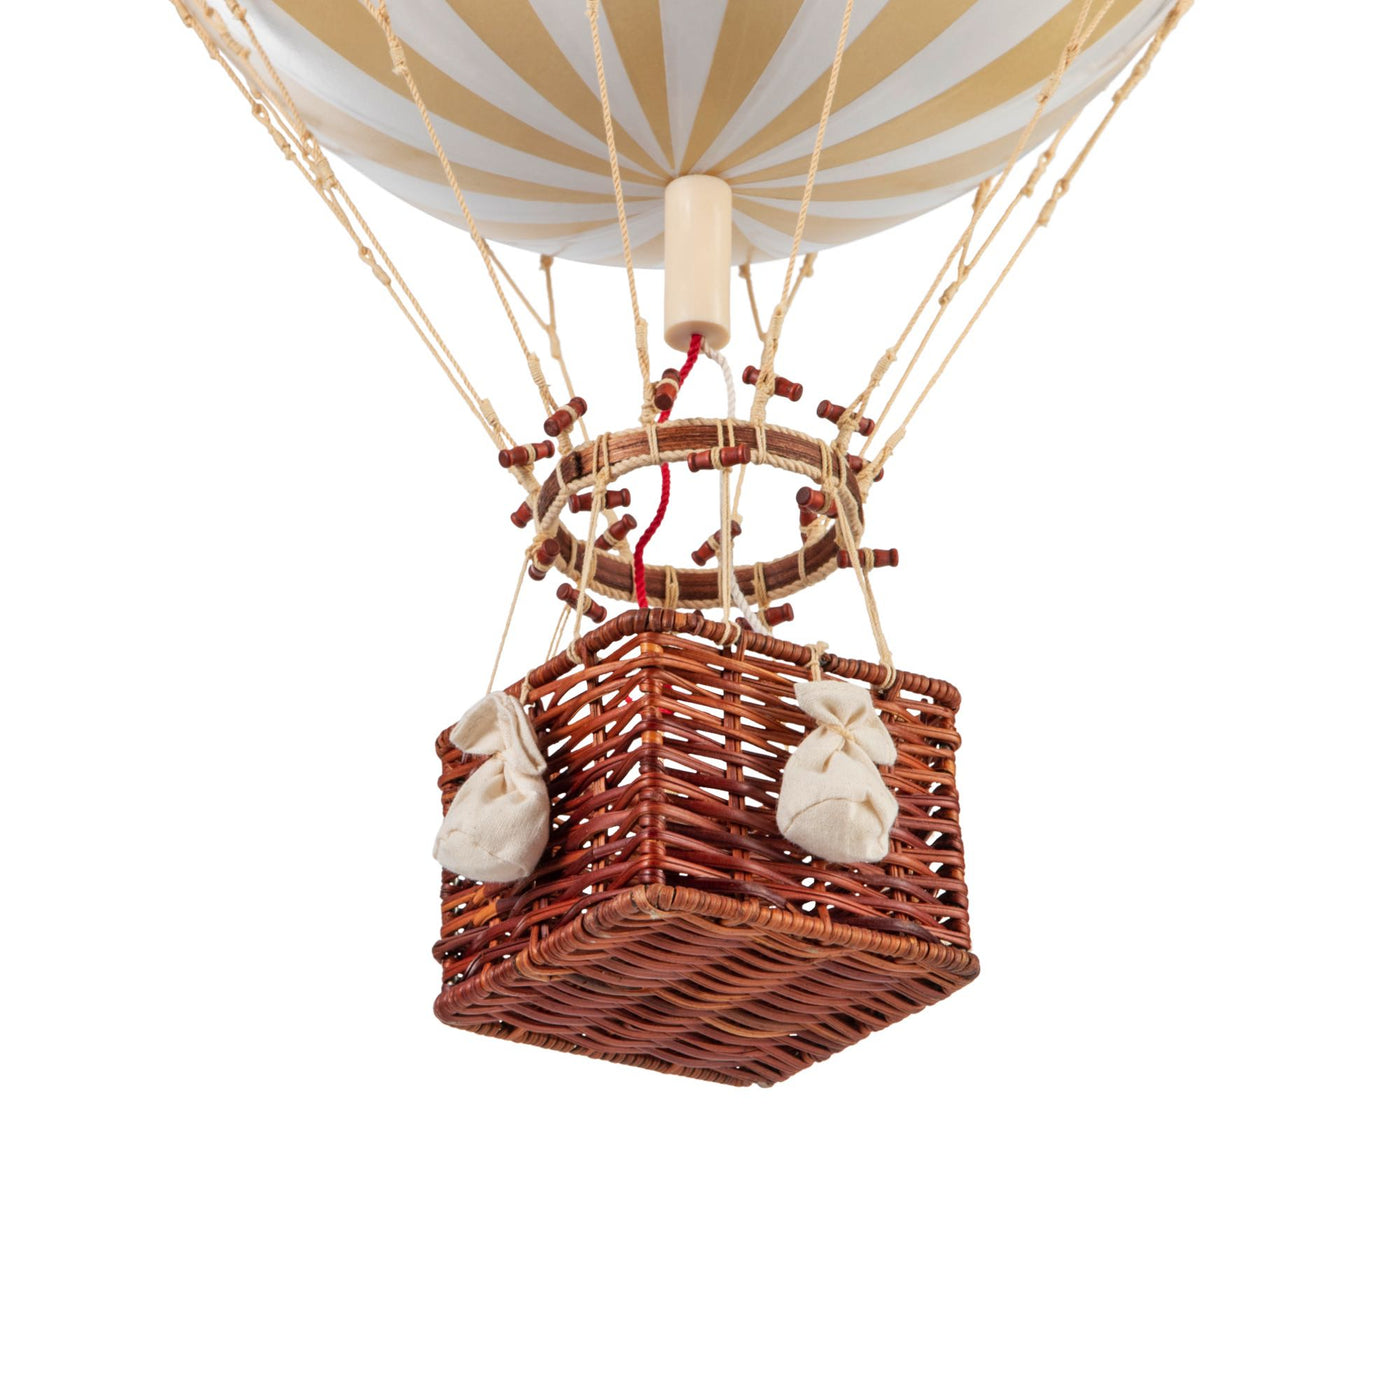 Luftballon White/Ivory, 32 cm. Royal Aero, Authentic Models